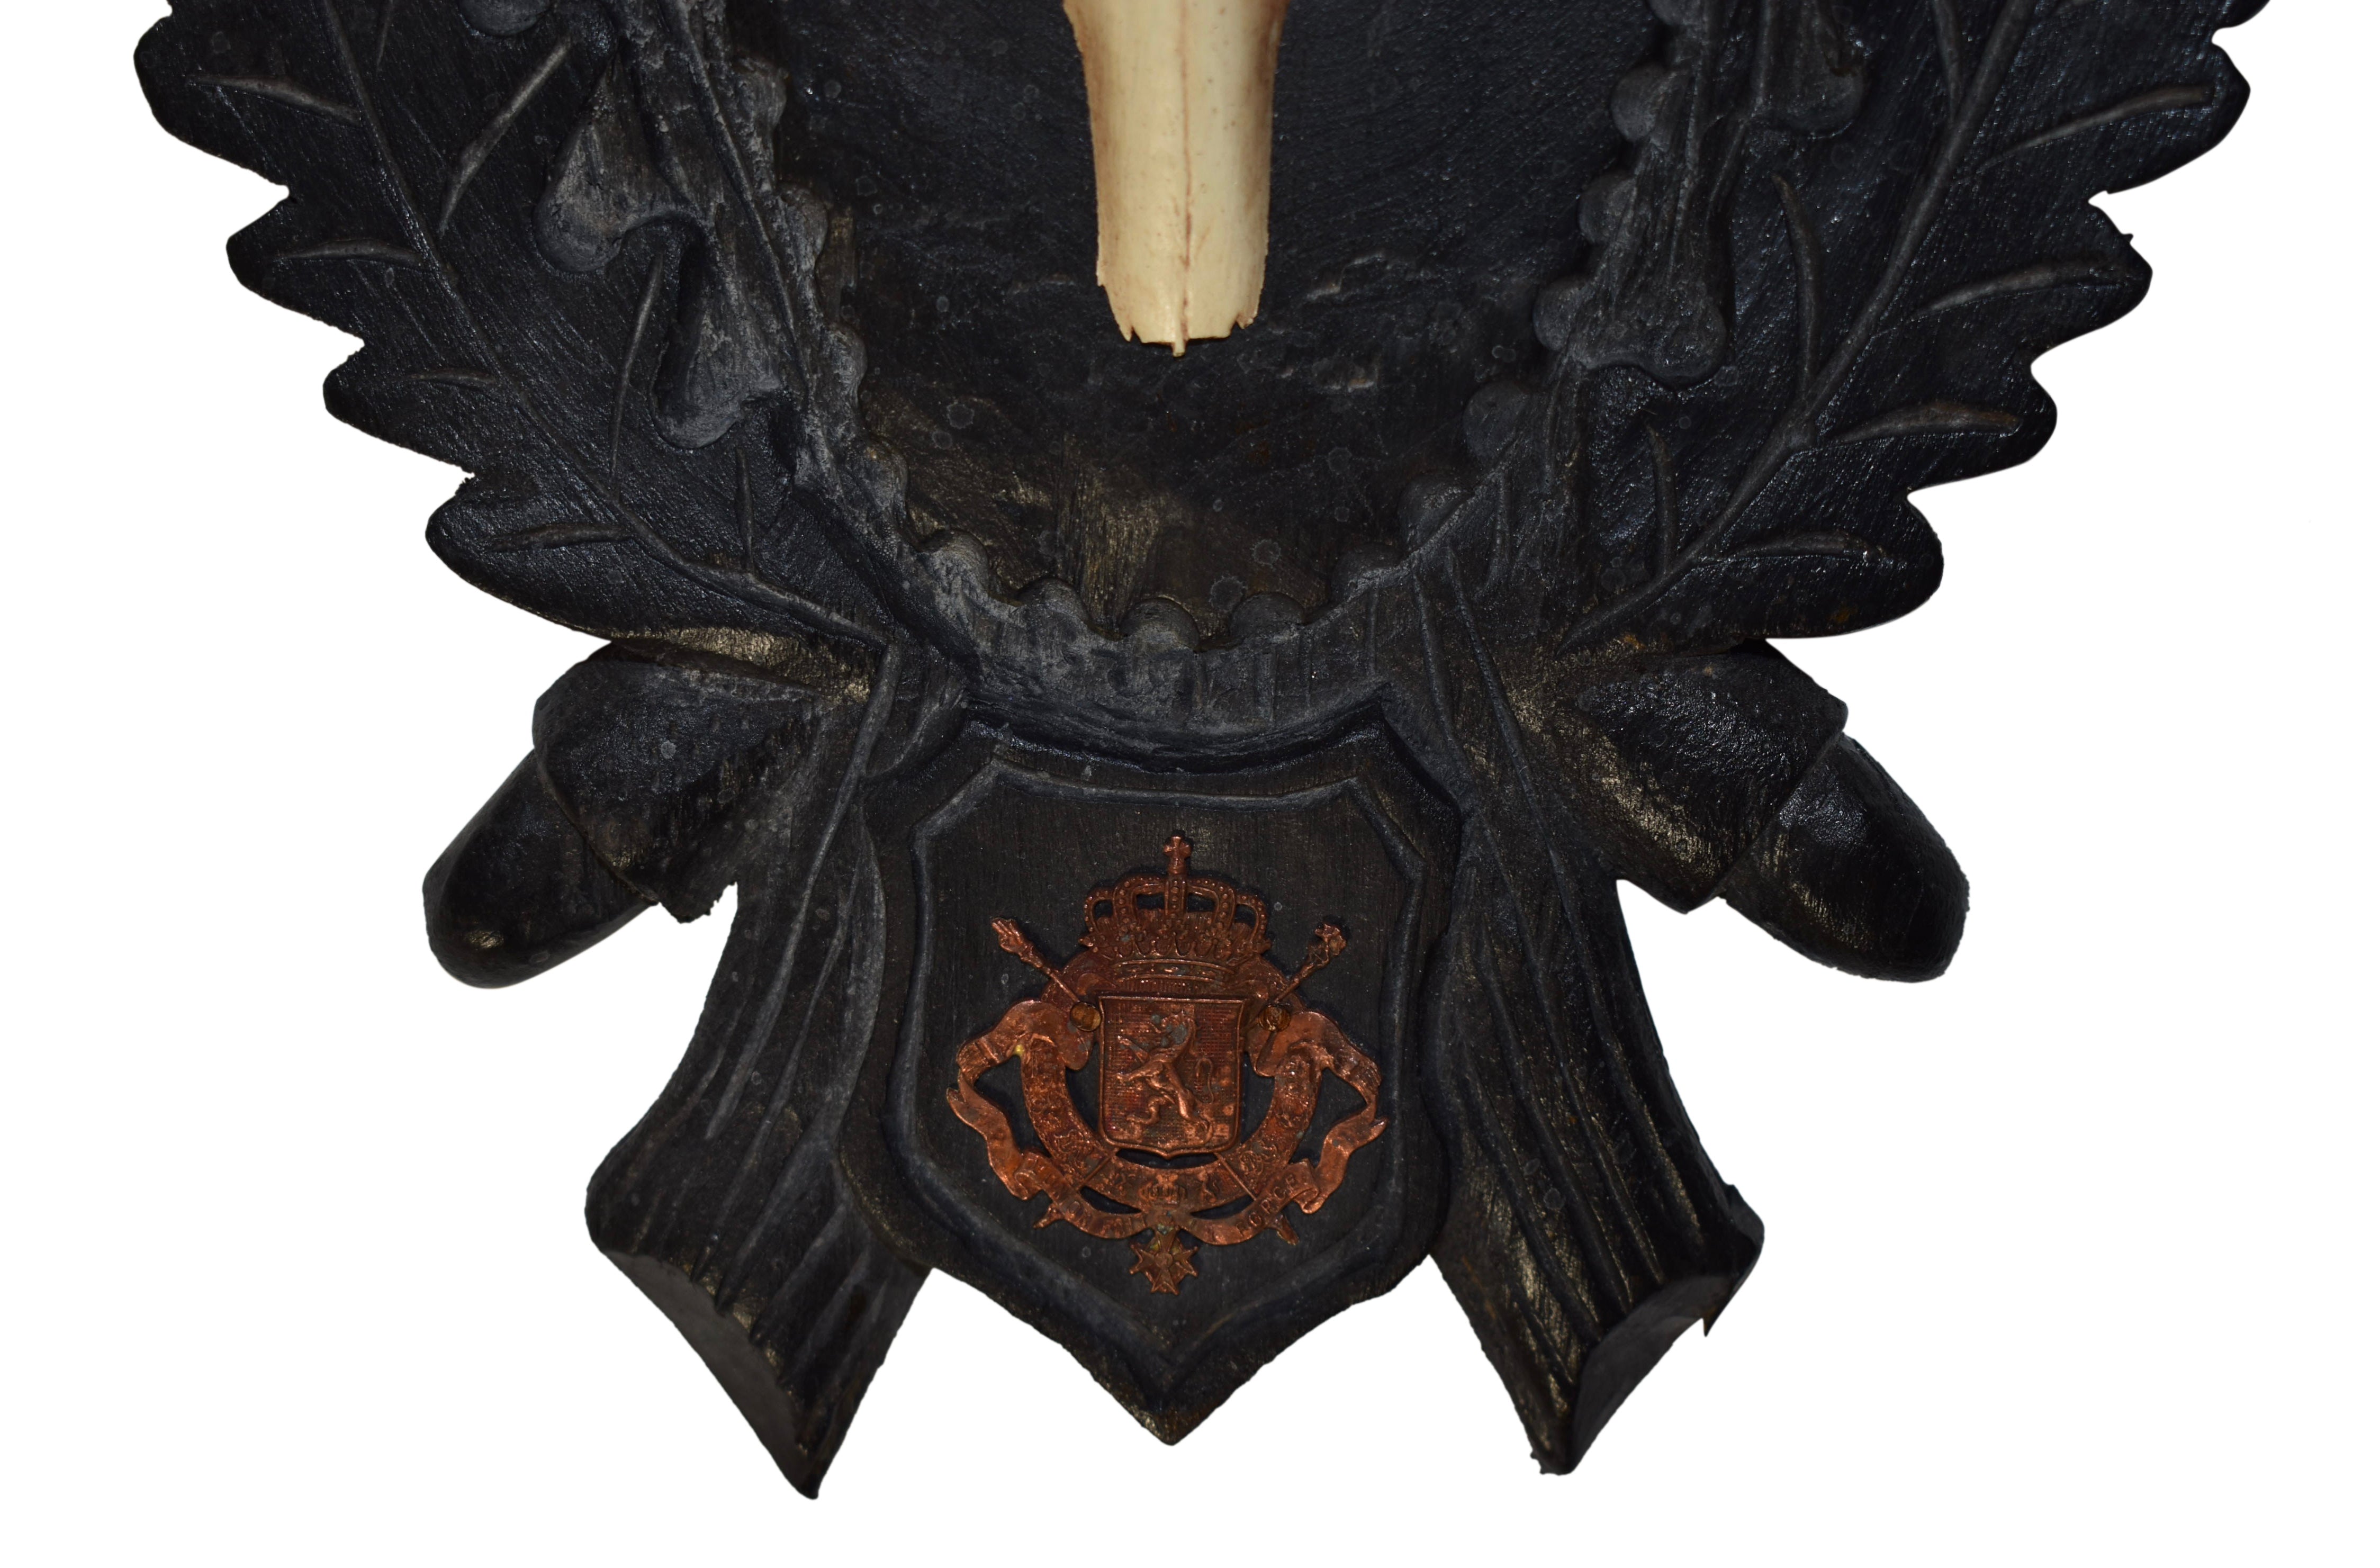 Roe Deer Trophy on Carved Plaque from King Leopold I of Belgium